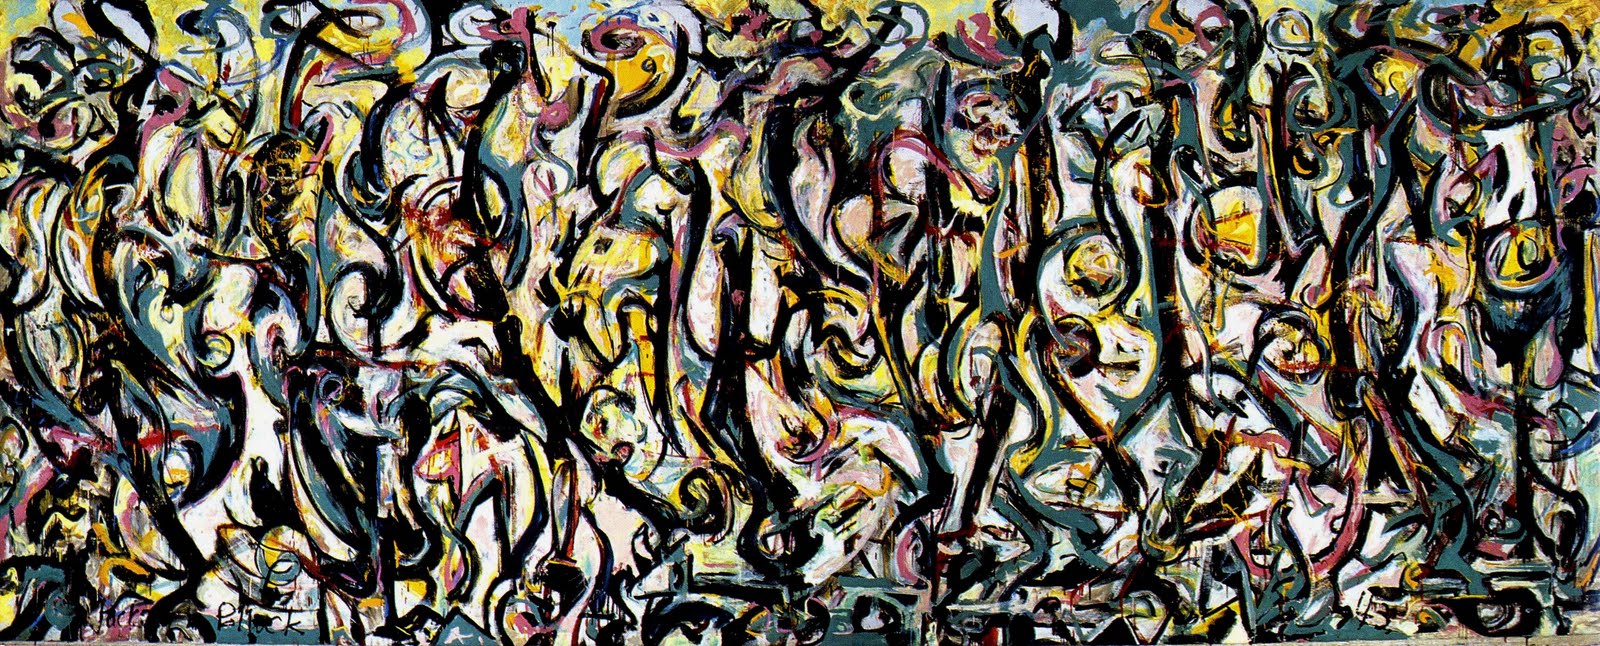 Mural de Jackson Pollock, 1943 (wikipaintings)